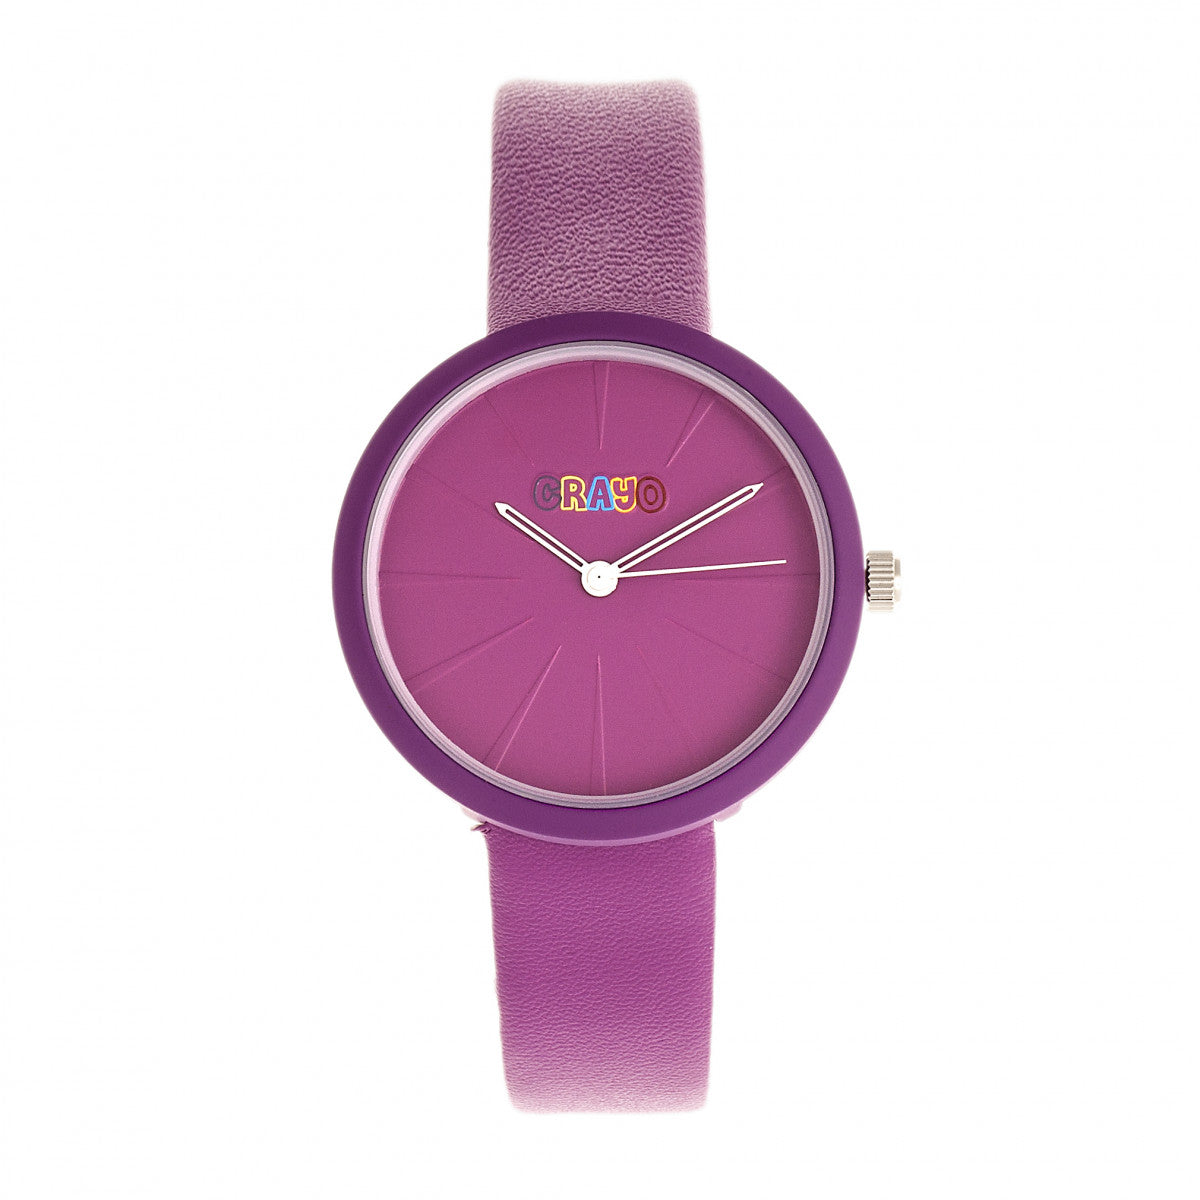 Crayo Blade Unisex Watch - Purple - CRACR5405